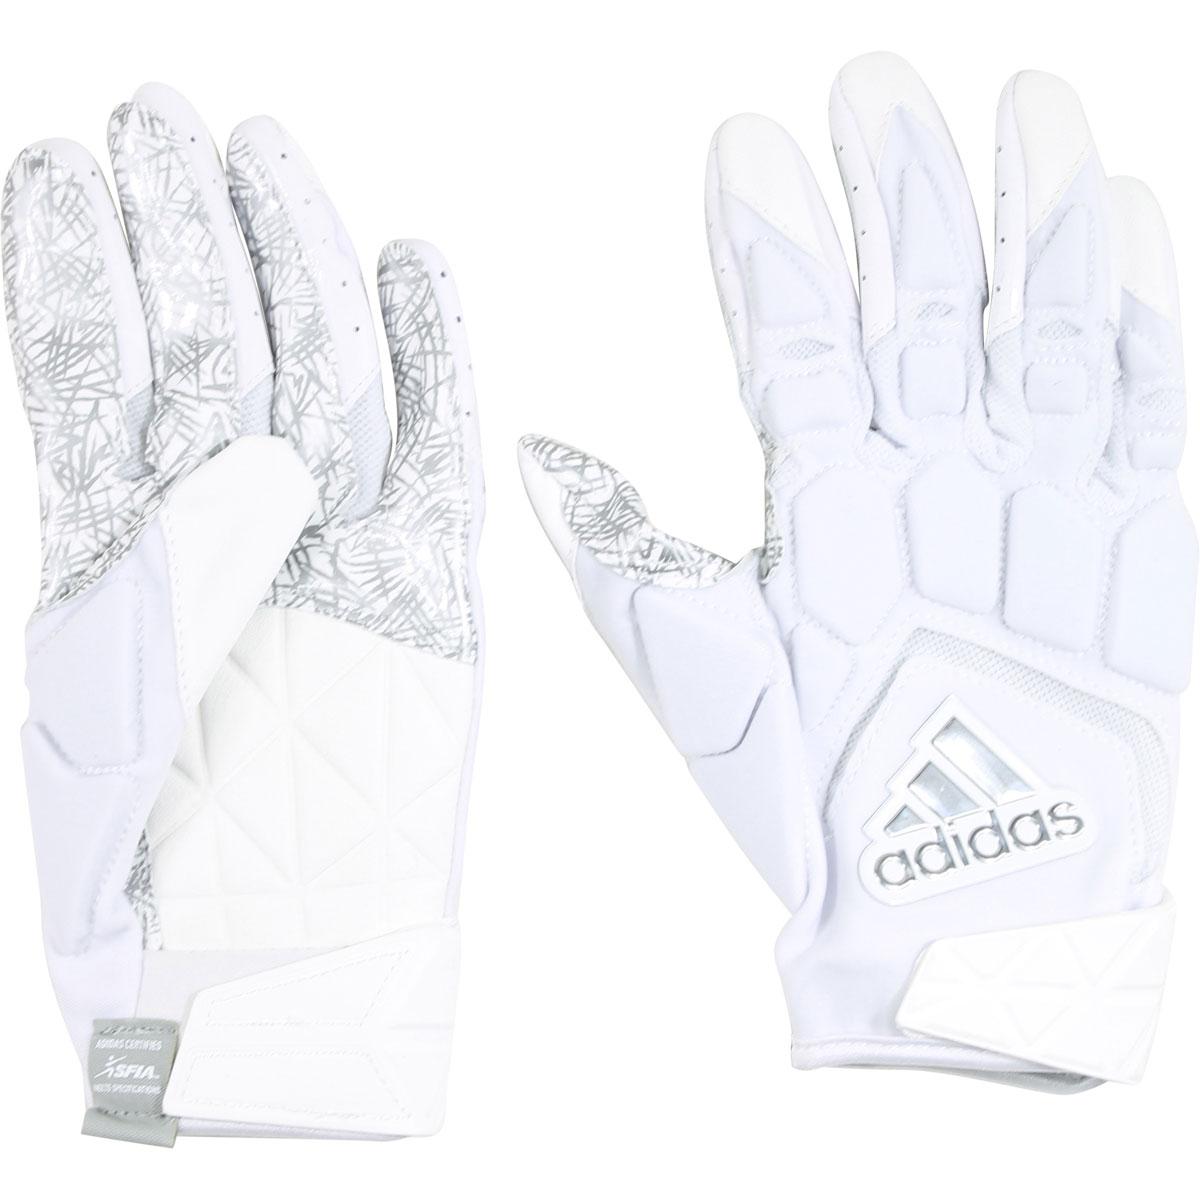 white adidas lineman gloves